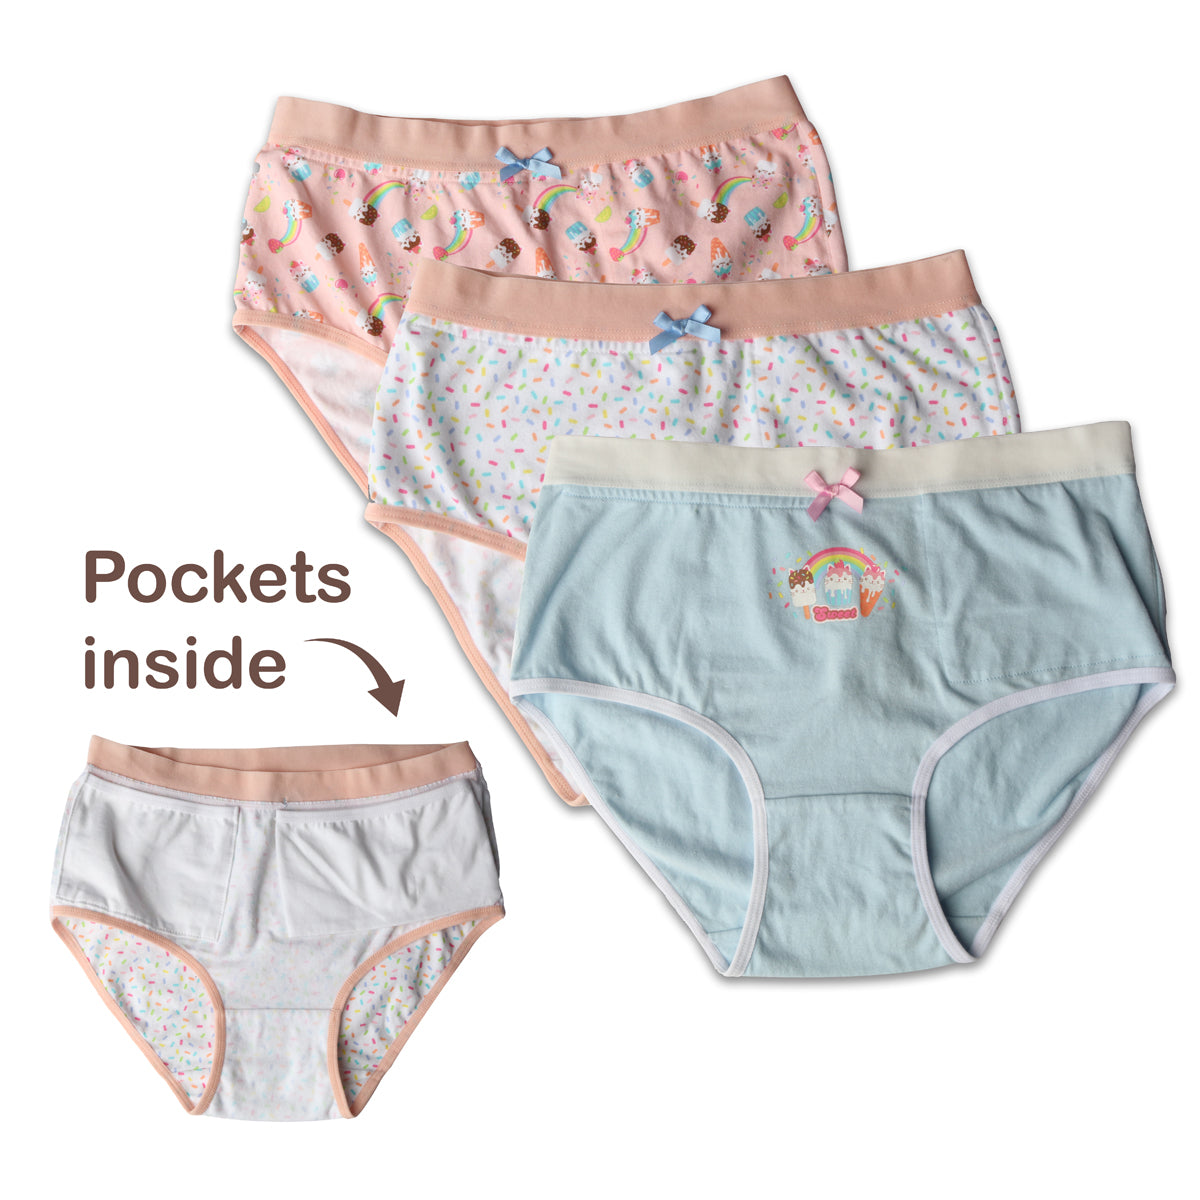 Shop Girls Incontinence Undies | My Private Pocket by Hidden